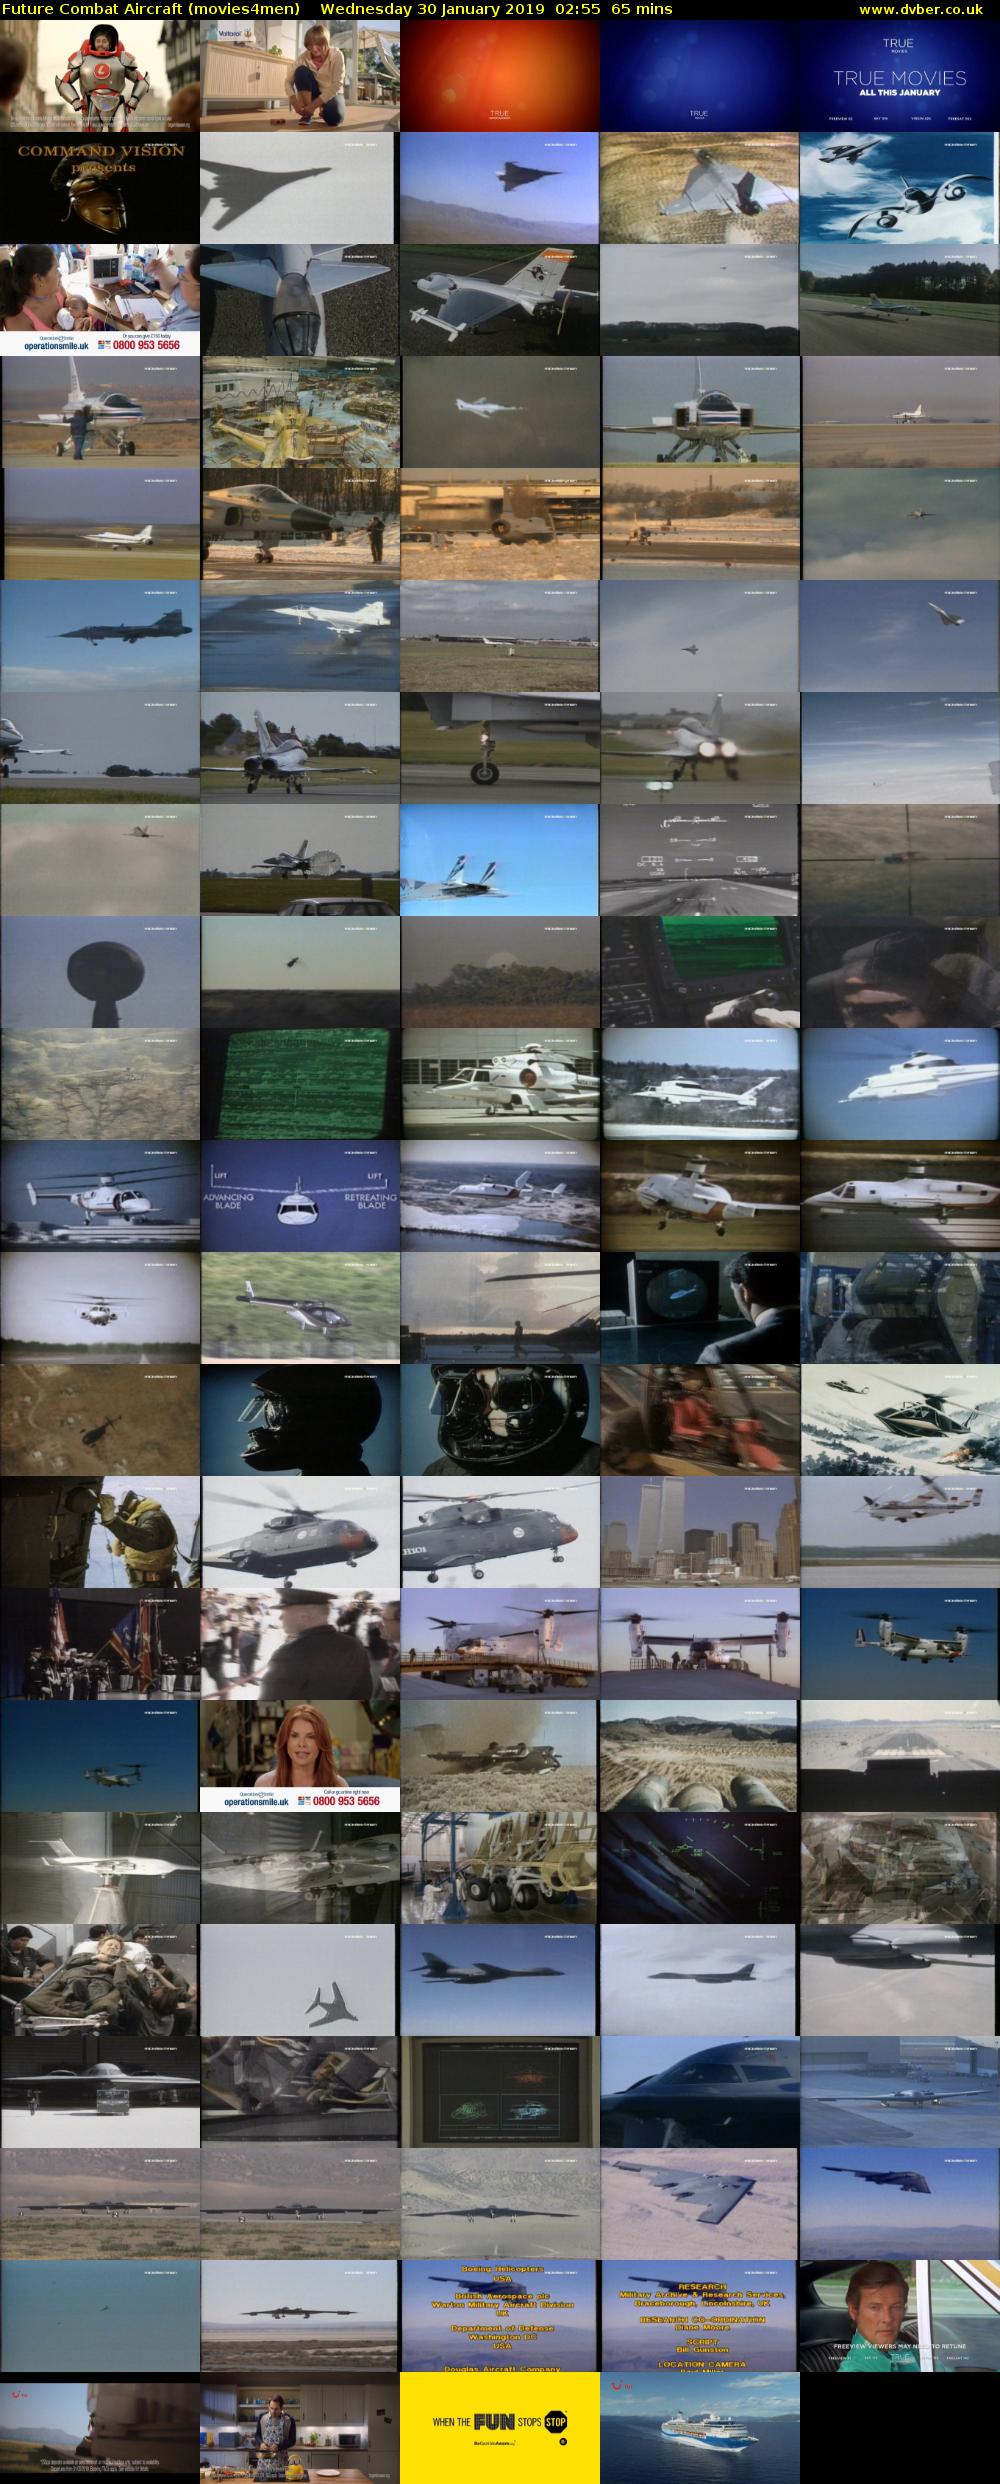 Future Combat Aircraft (movies4men) Wednesday 30 January 2019 02:55 - 04:00